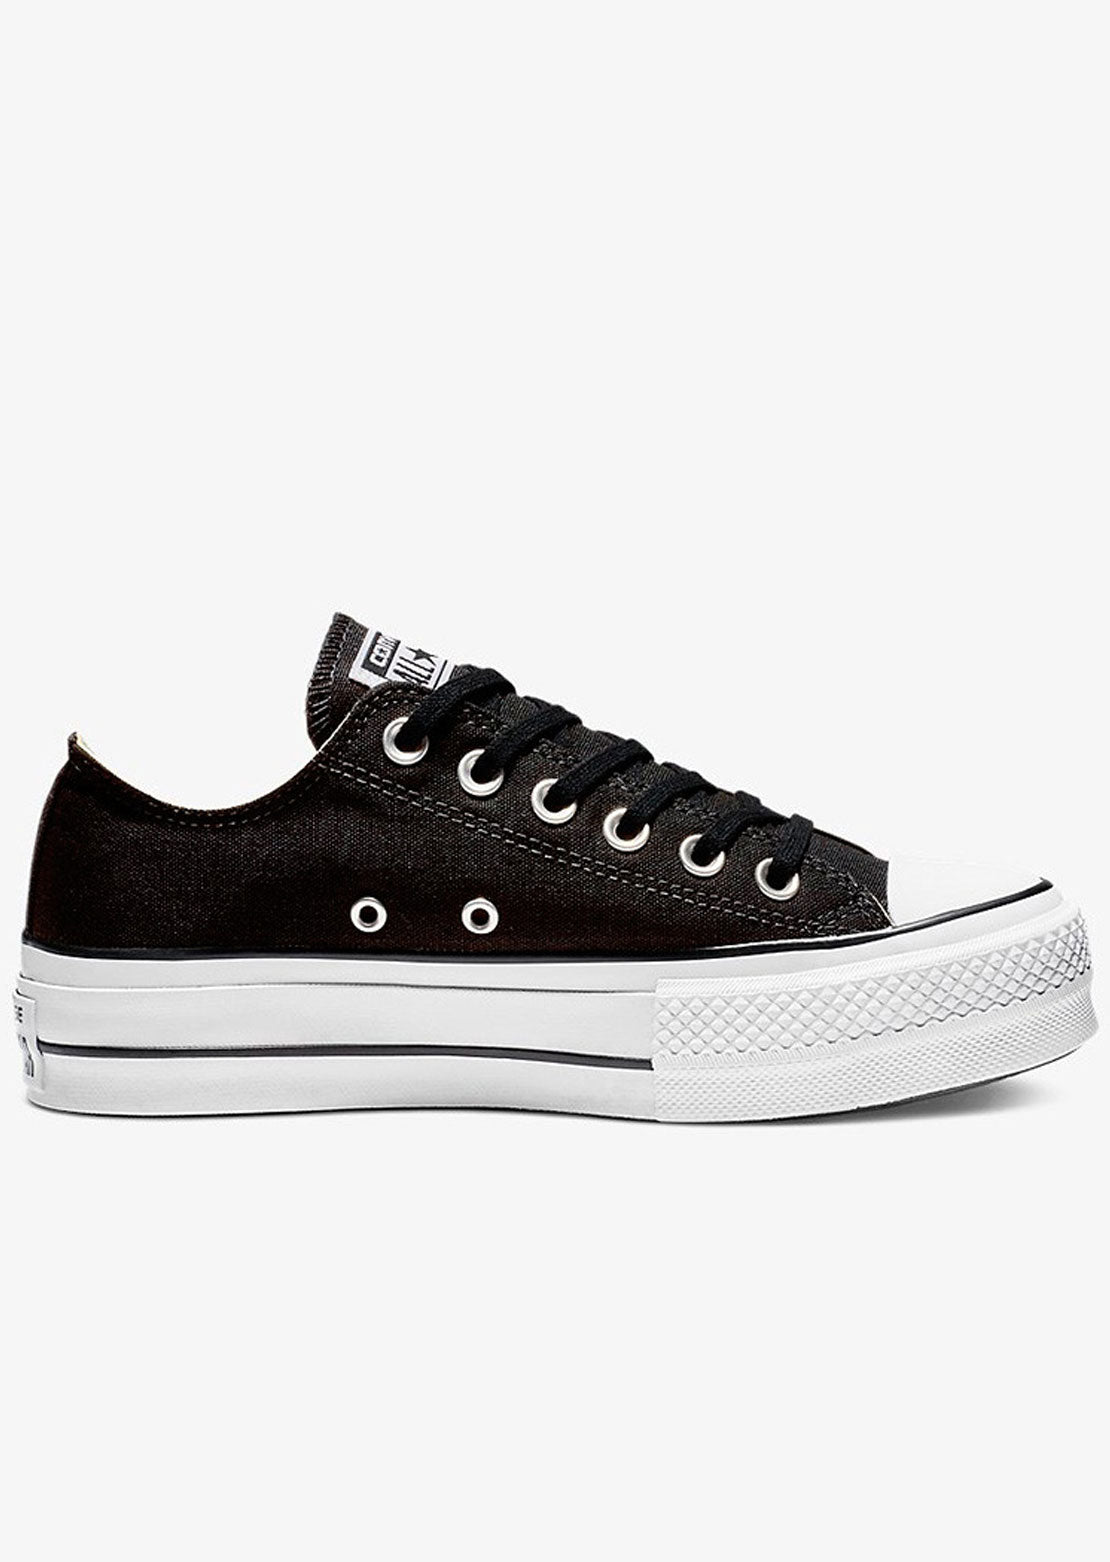 Converse Women’s Chuck Taylor OX Lift Platform Shoes 560250C Black/White